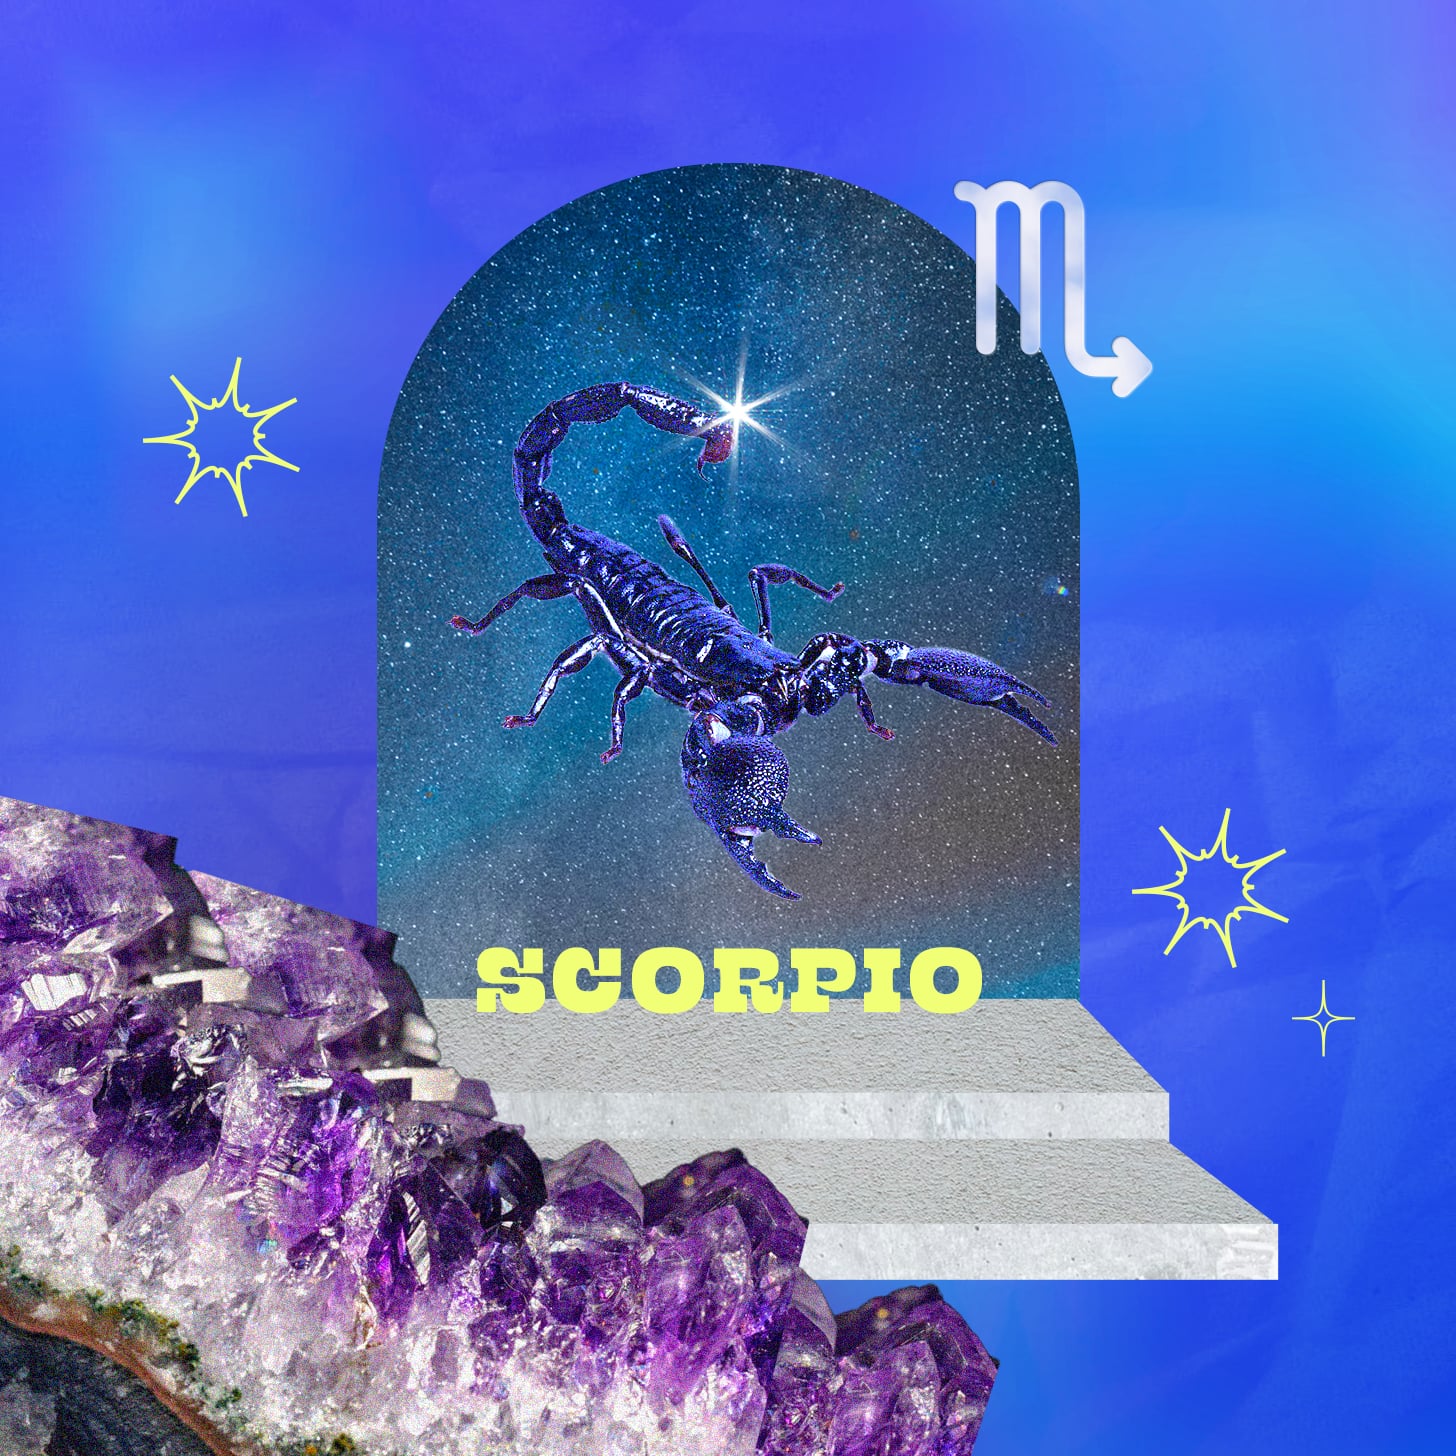 Scorpio weekly horoscope for December 4, 2022